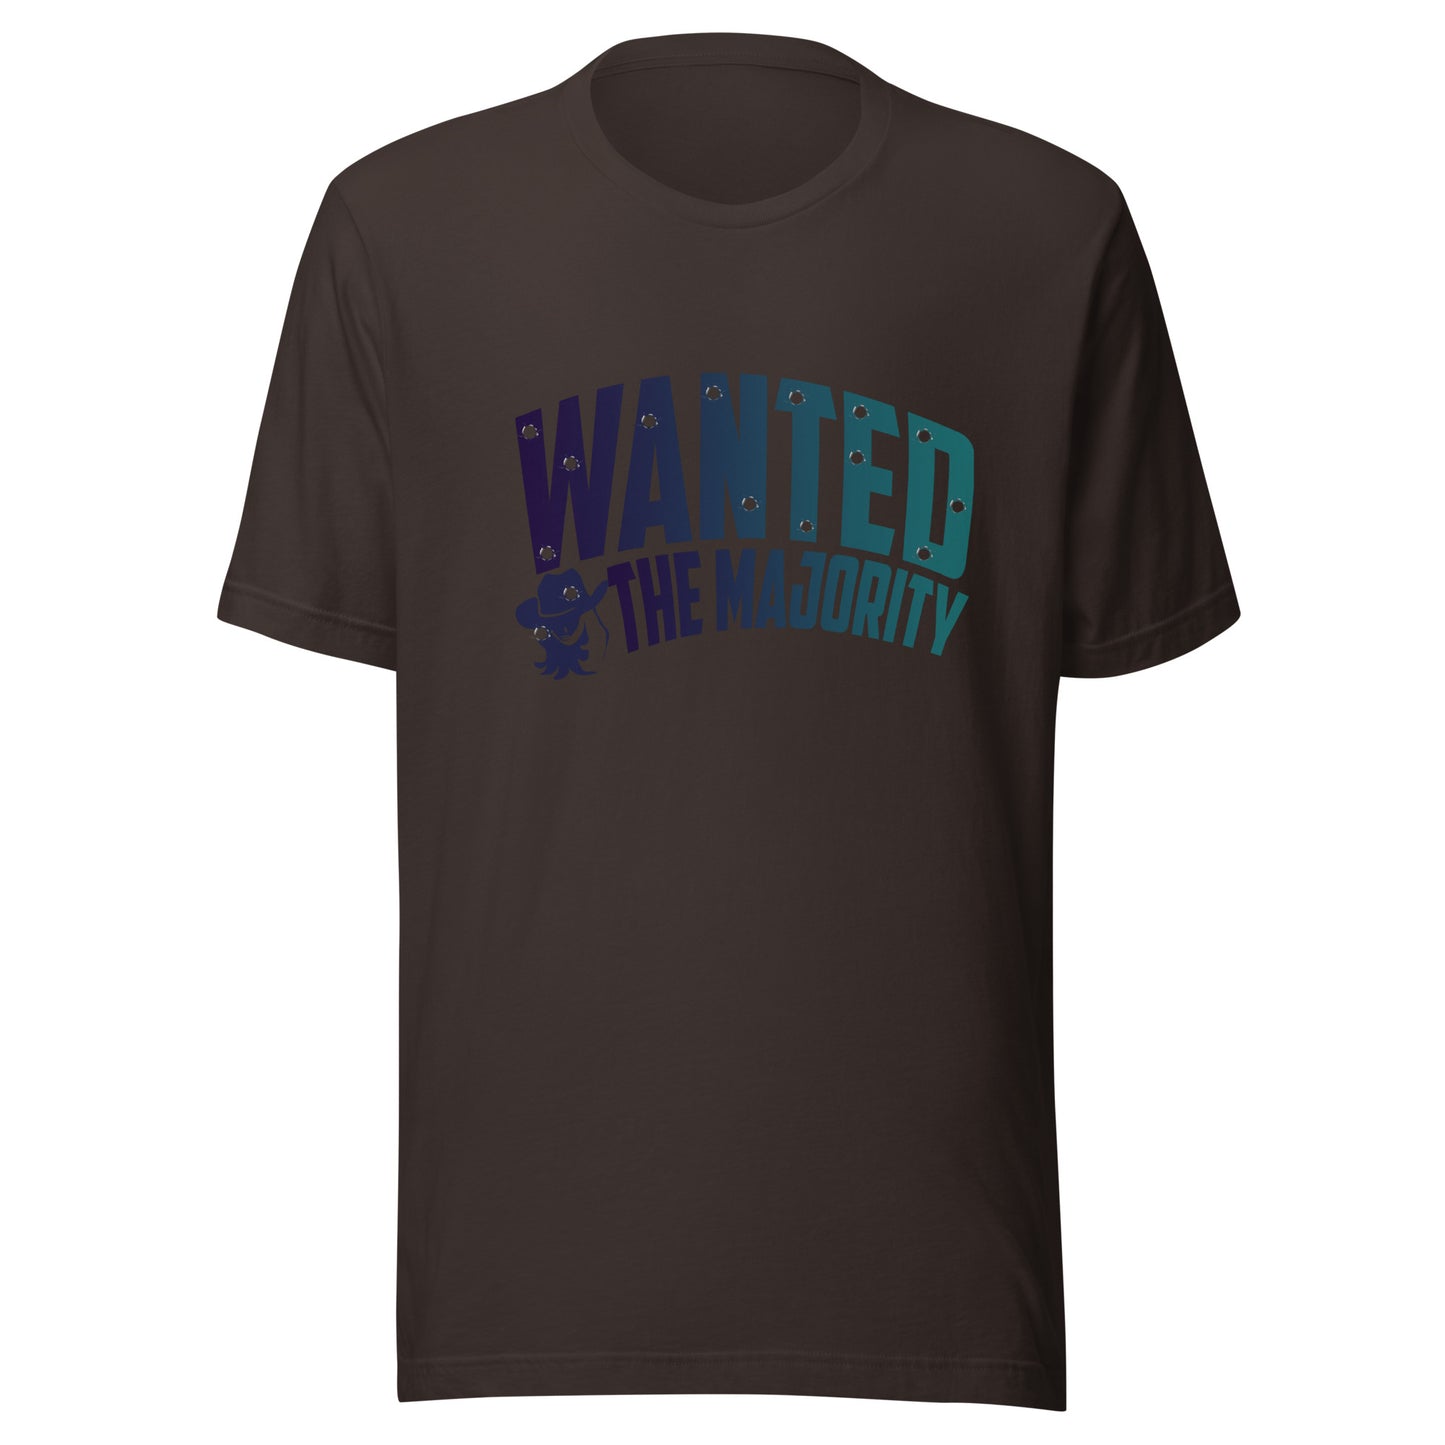 "Wanted" Unisex t-shirt